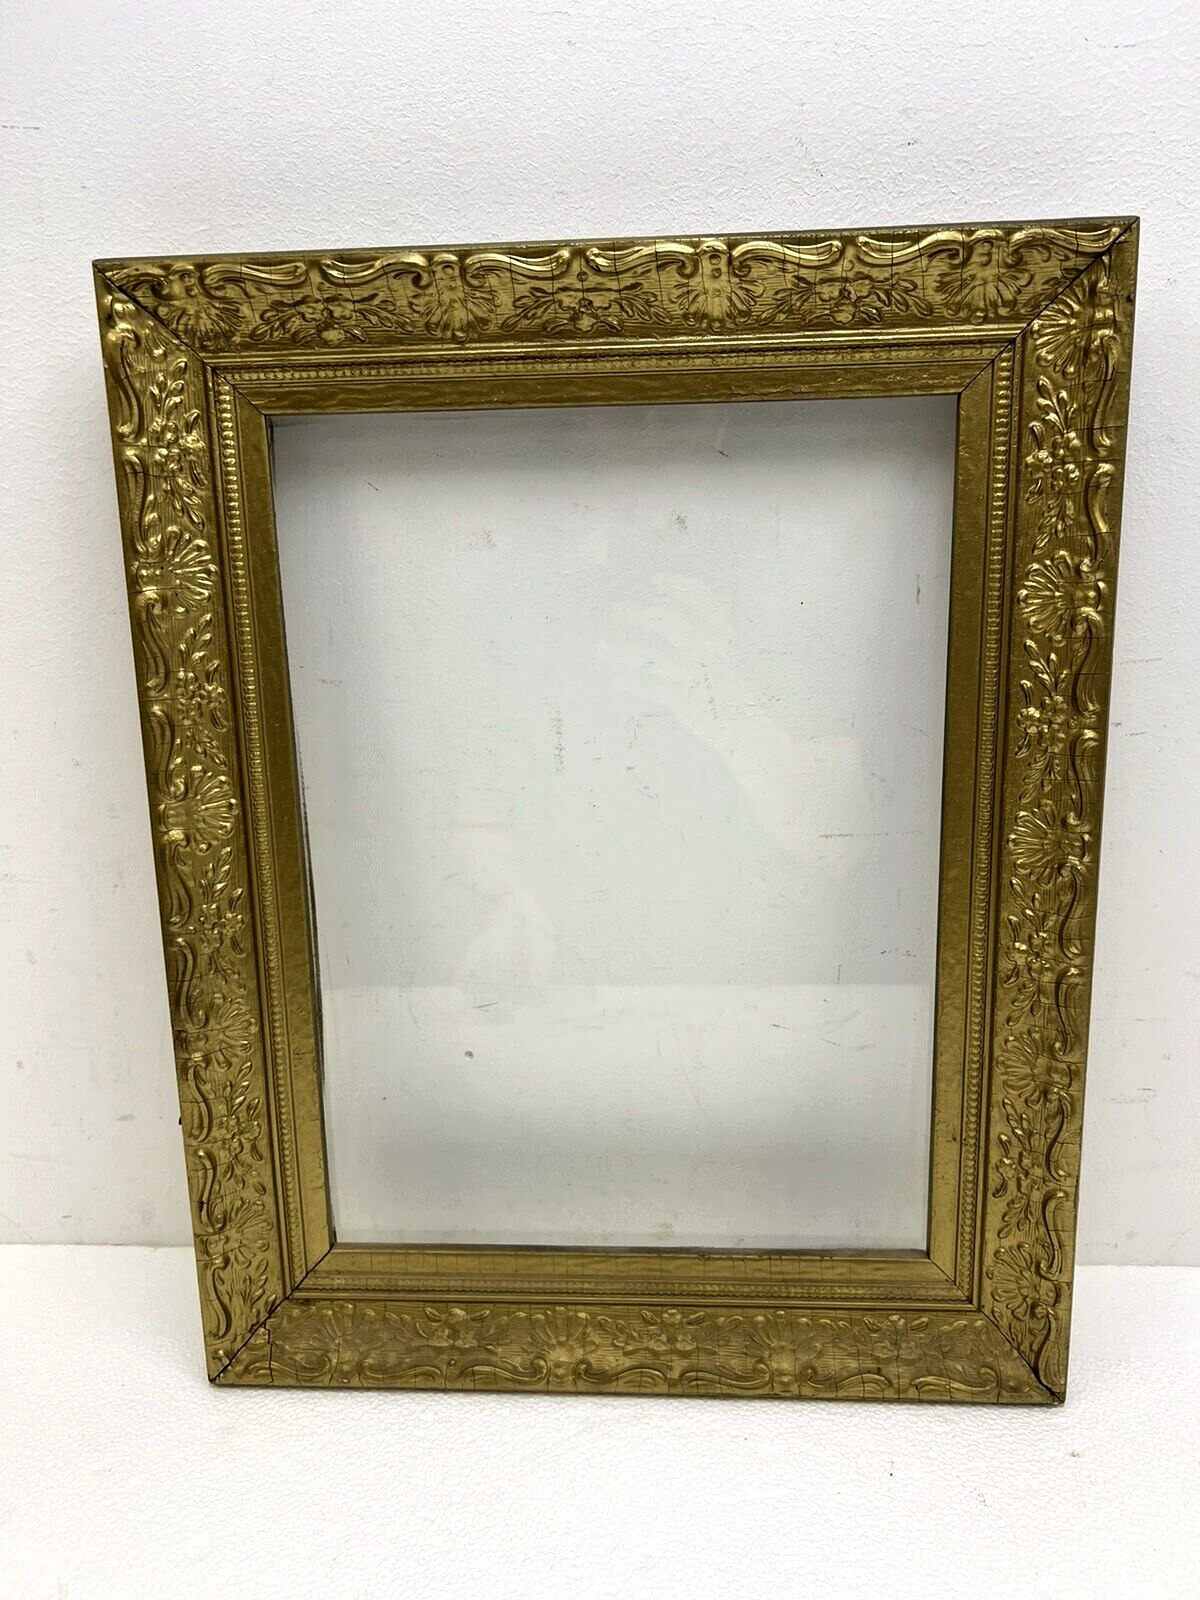 Antique Picture Frame gold wood vintage ornate gilt gesso wall art FITS 12 x 16